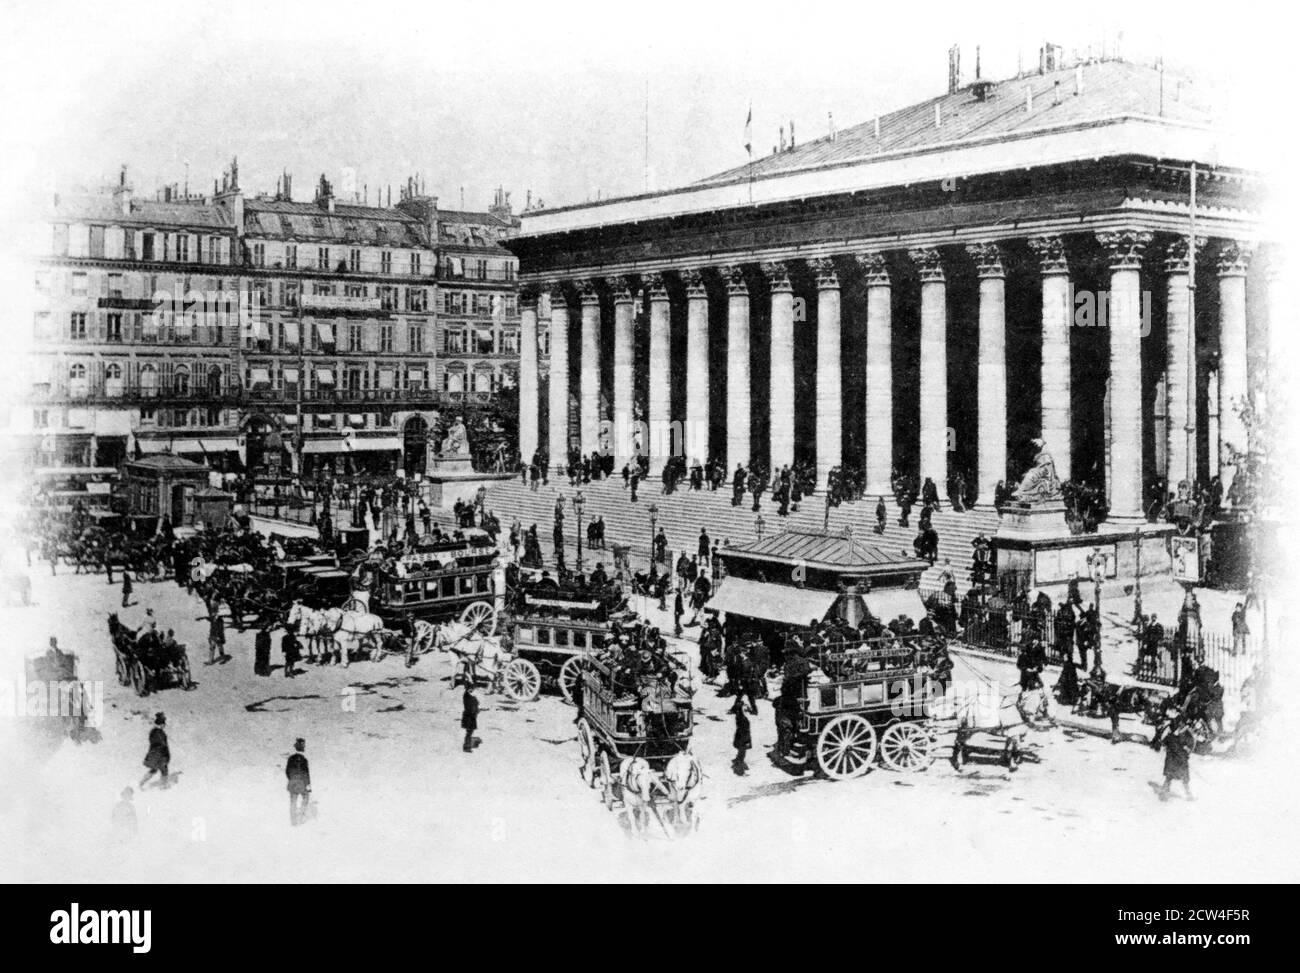 A historical view of the Bourse in the Place de la Bourse, 2nd arrondissement, Paris, France, taken from a postcard c.1900s. Stock Photo